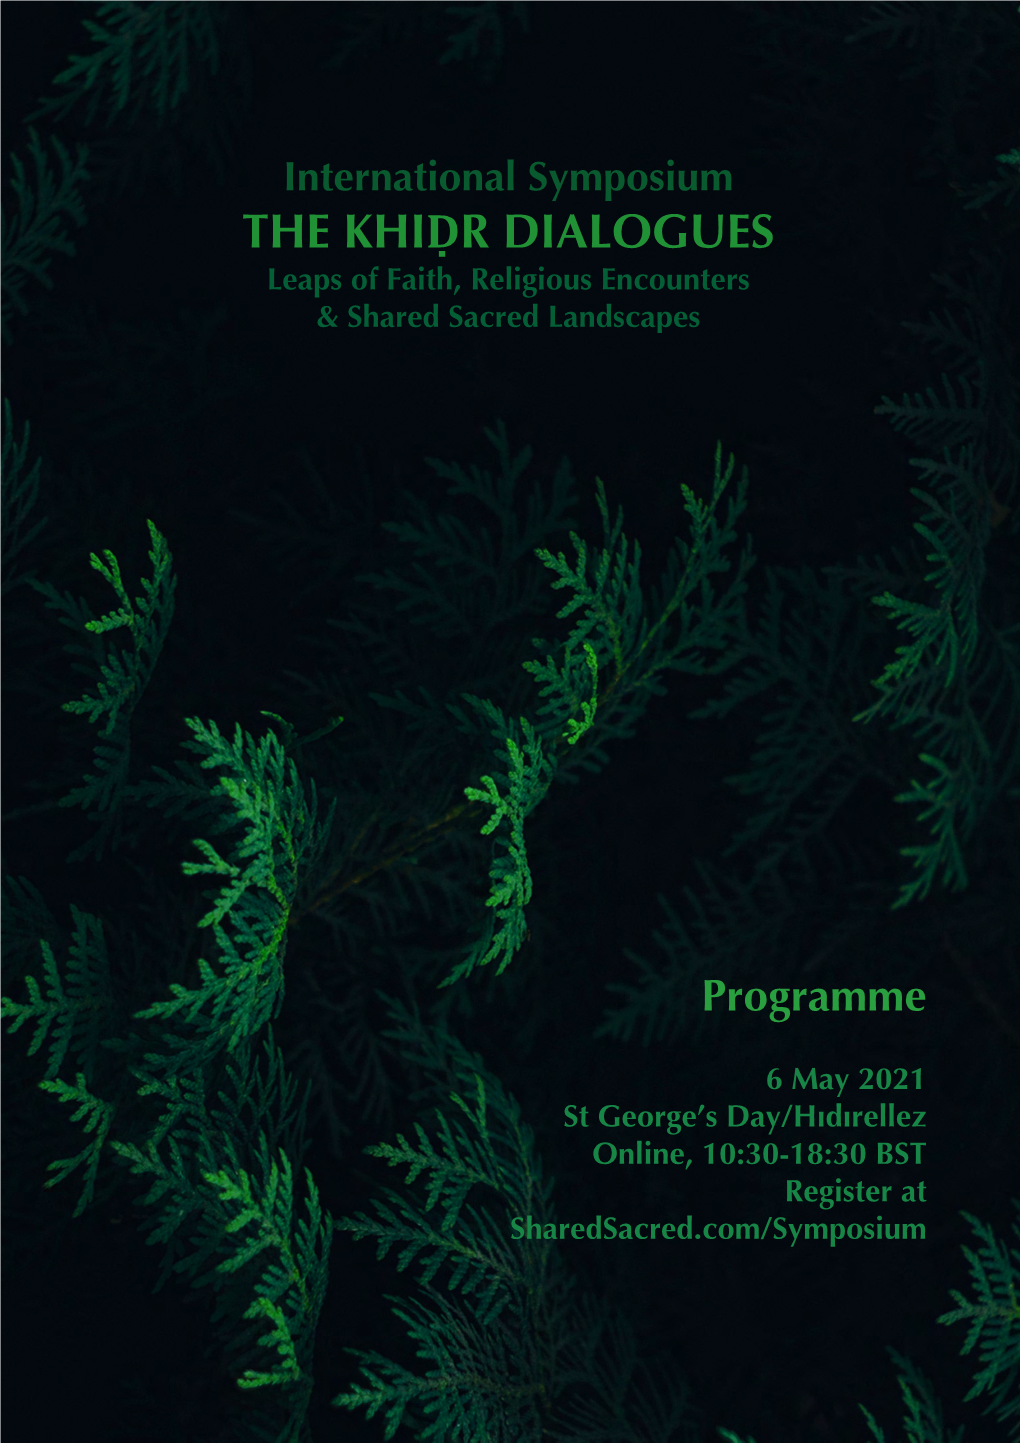 06.05.21 International Symposium: "The Khiḍr Dialogues